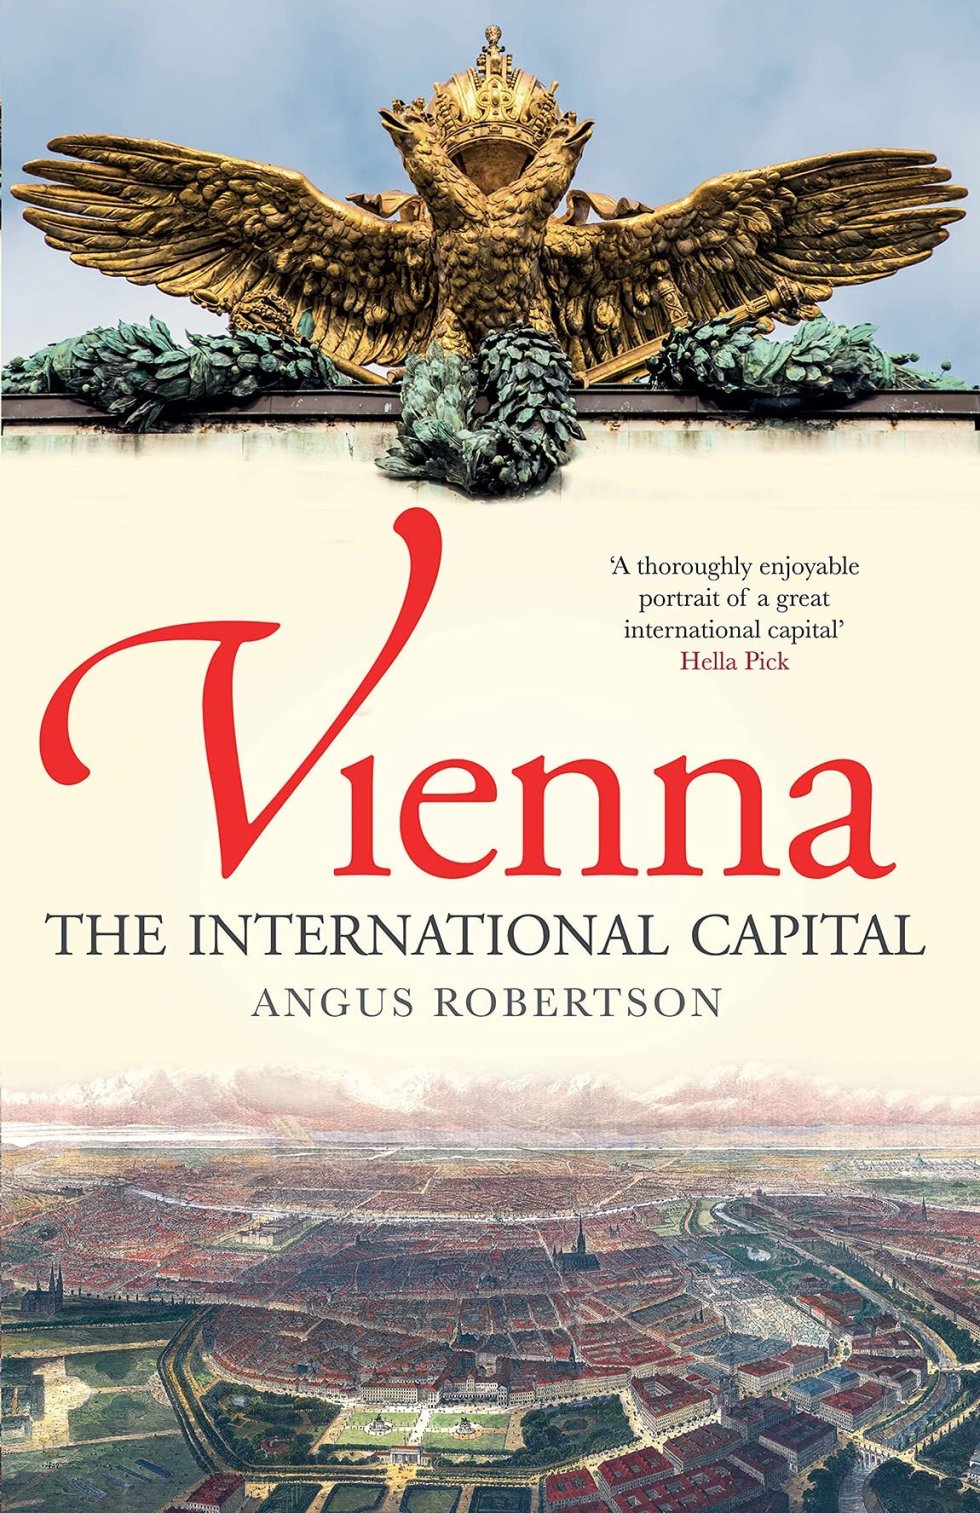 Crossroads of Civilization - A History of Vienna